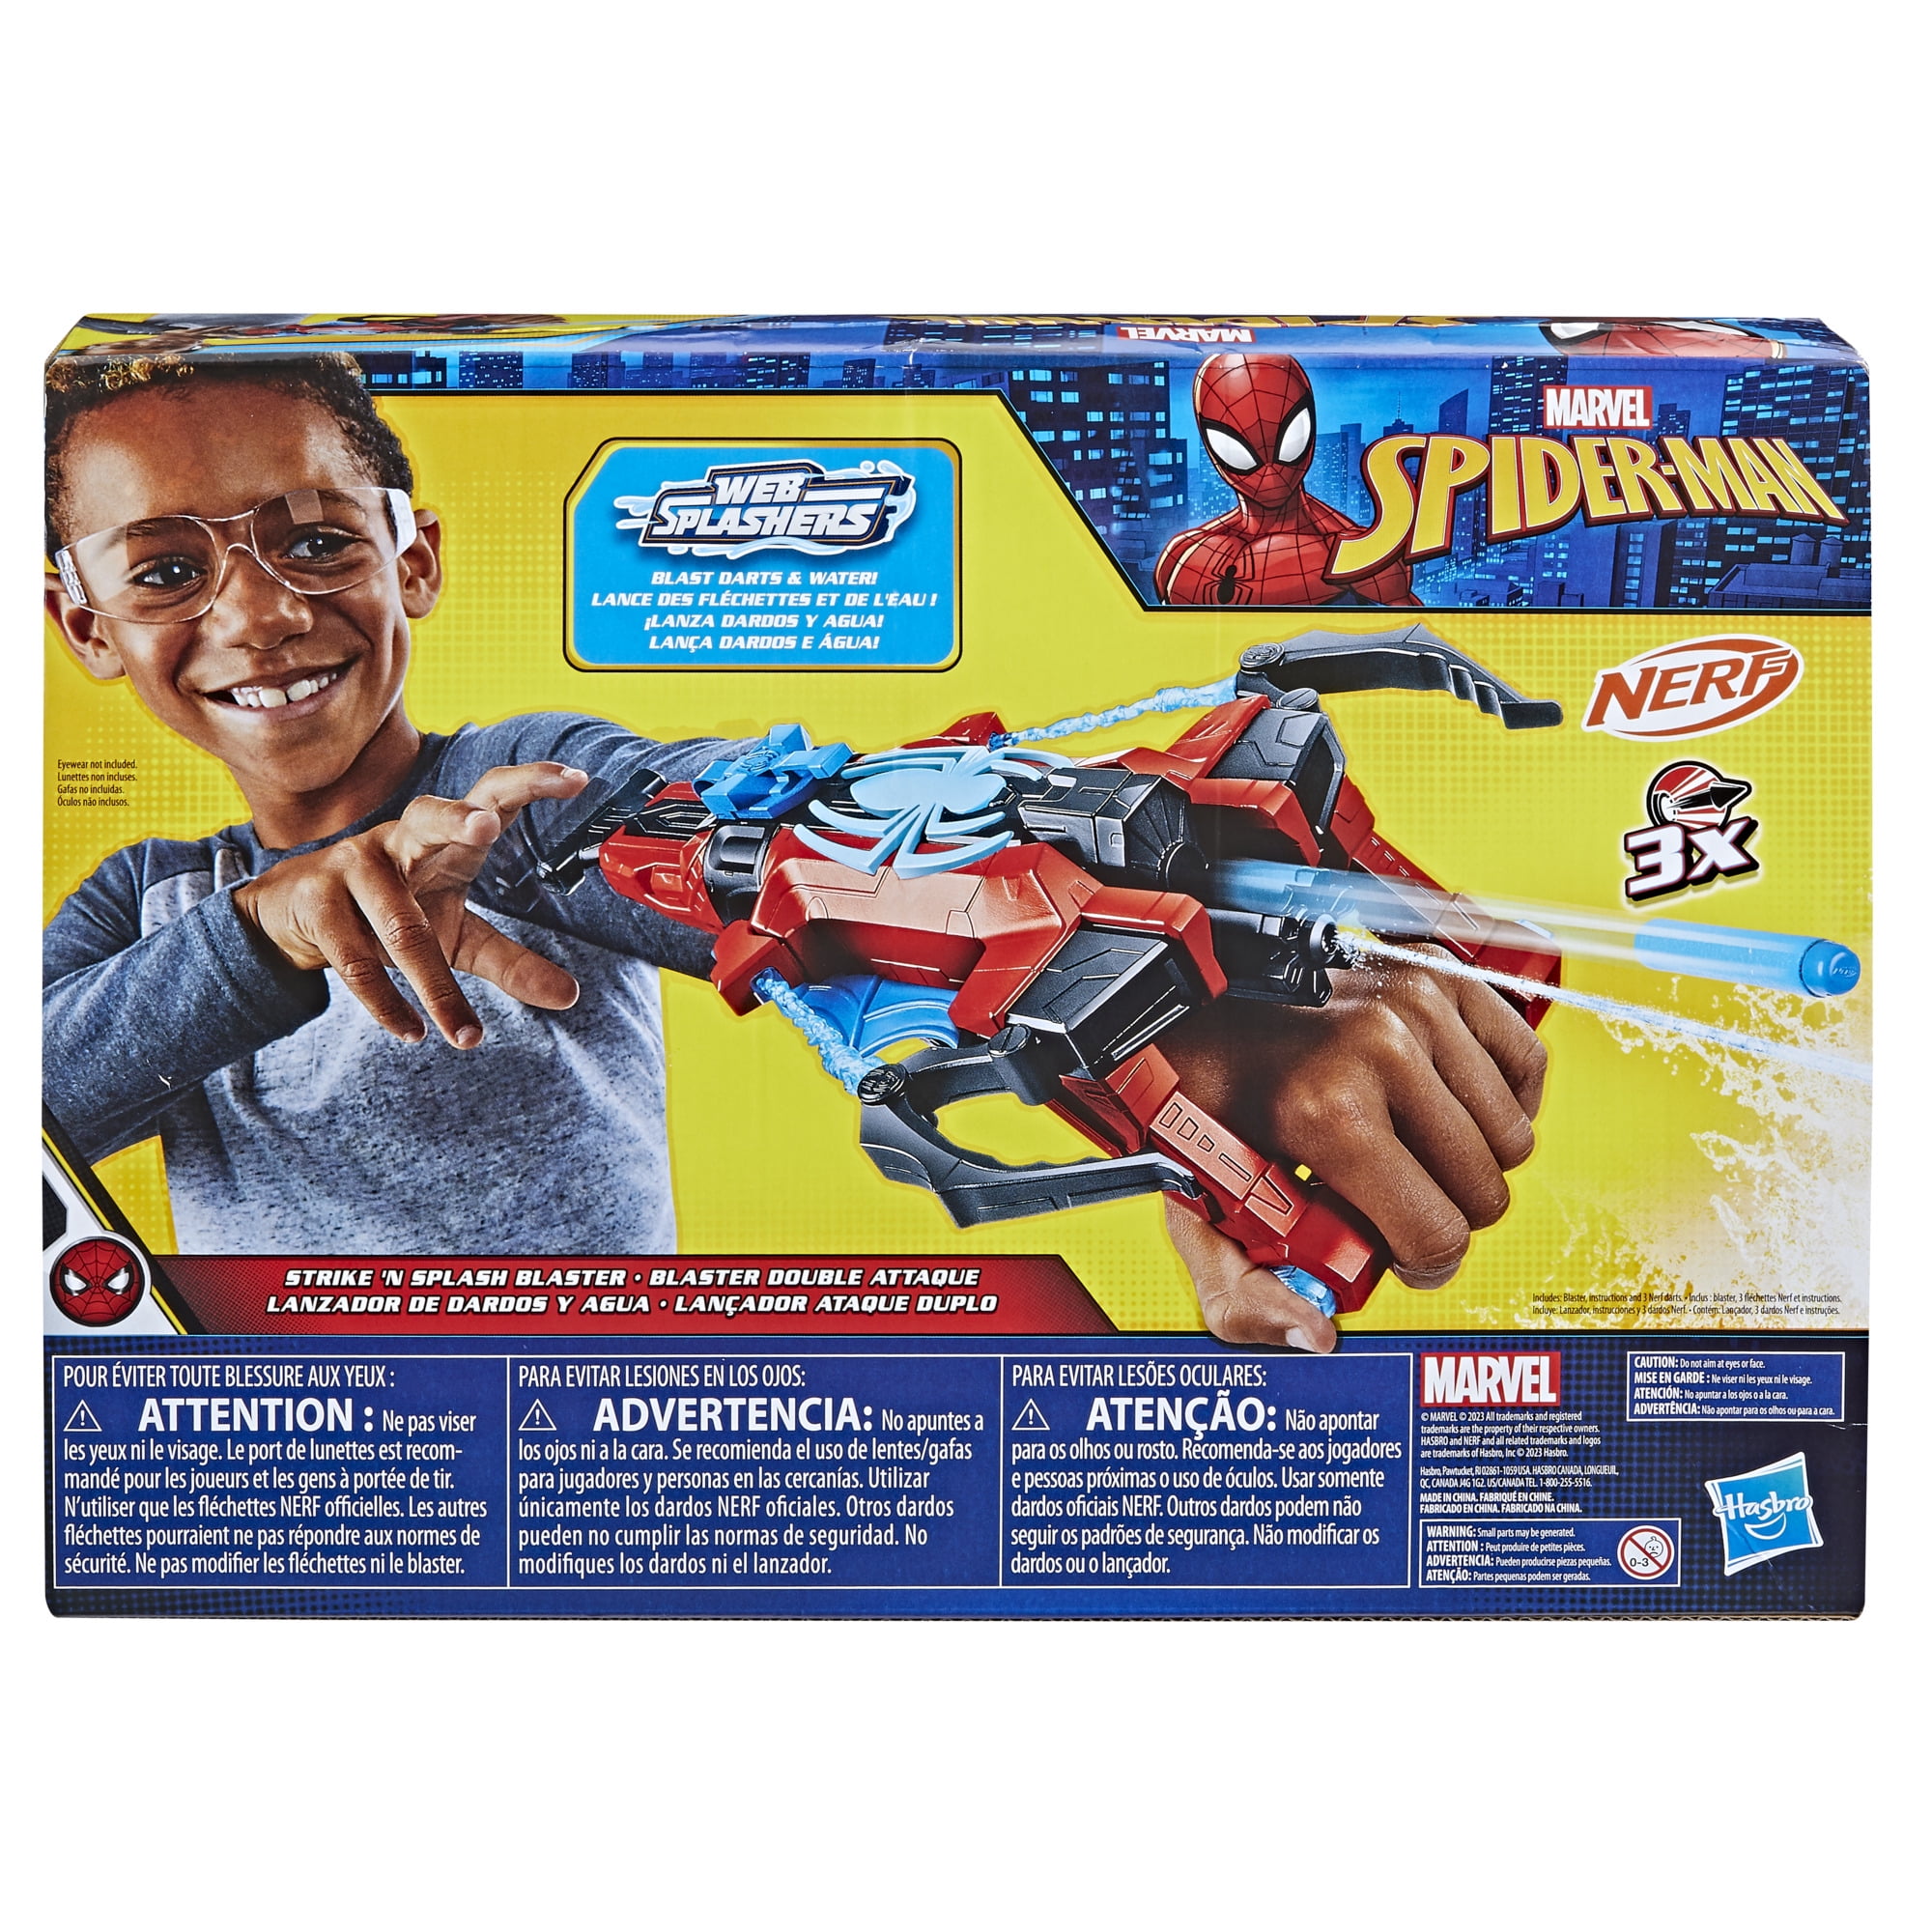 Spider-Man Spiderbolt NERF Blaster & Mask Only $14 on Walmart.com